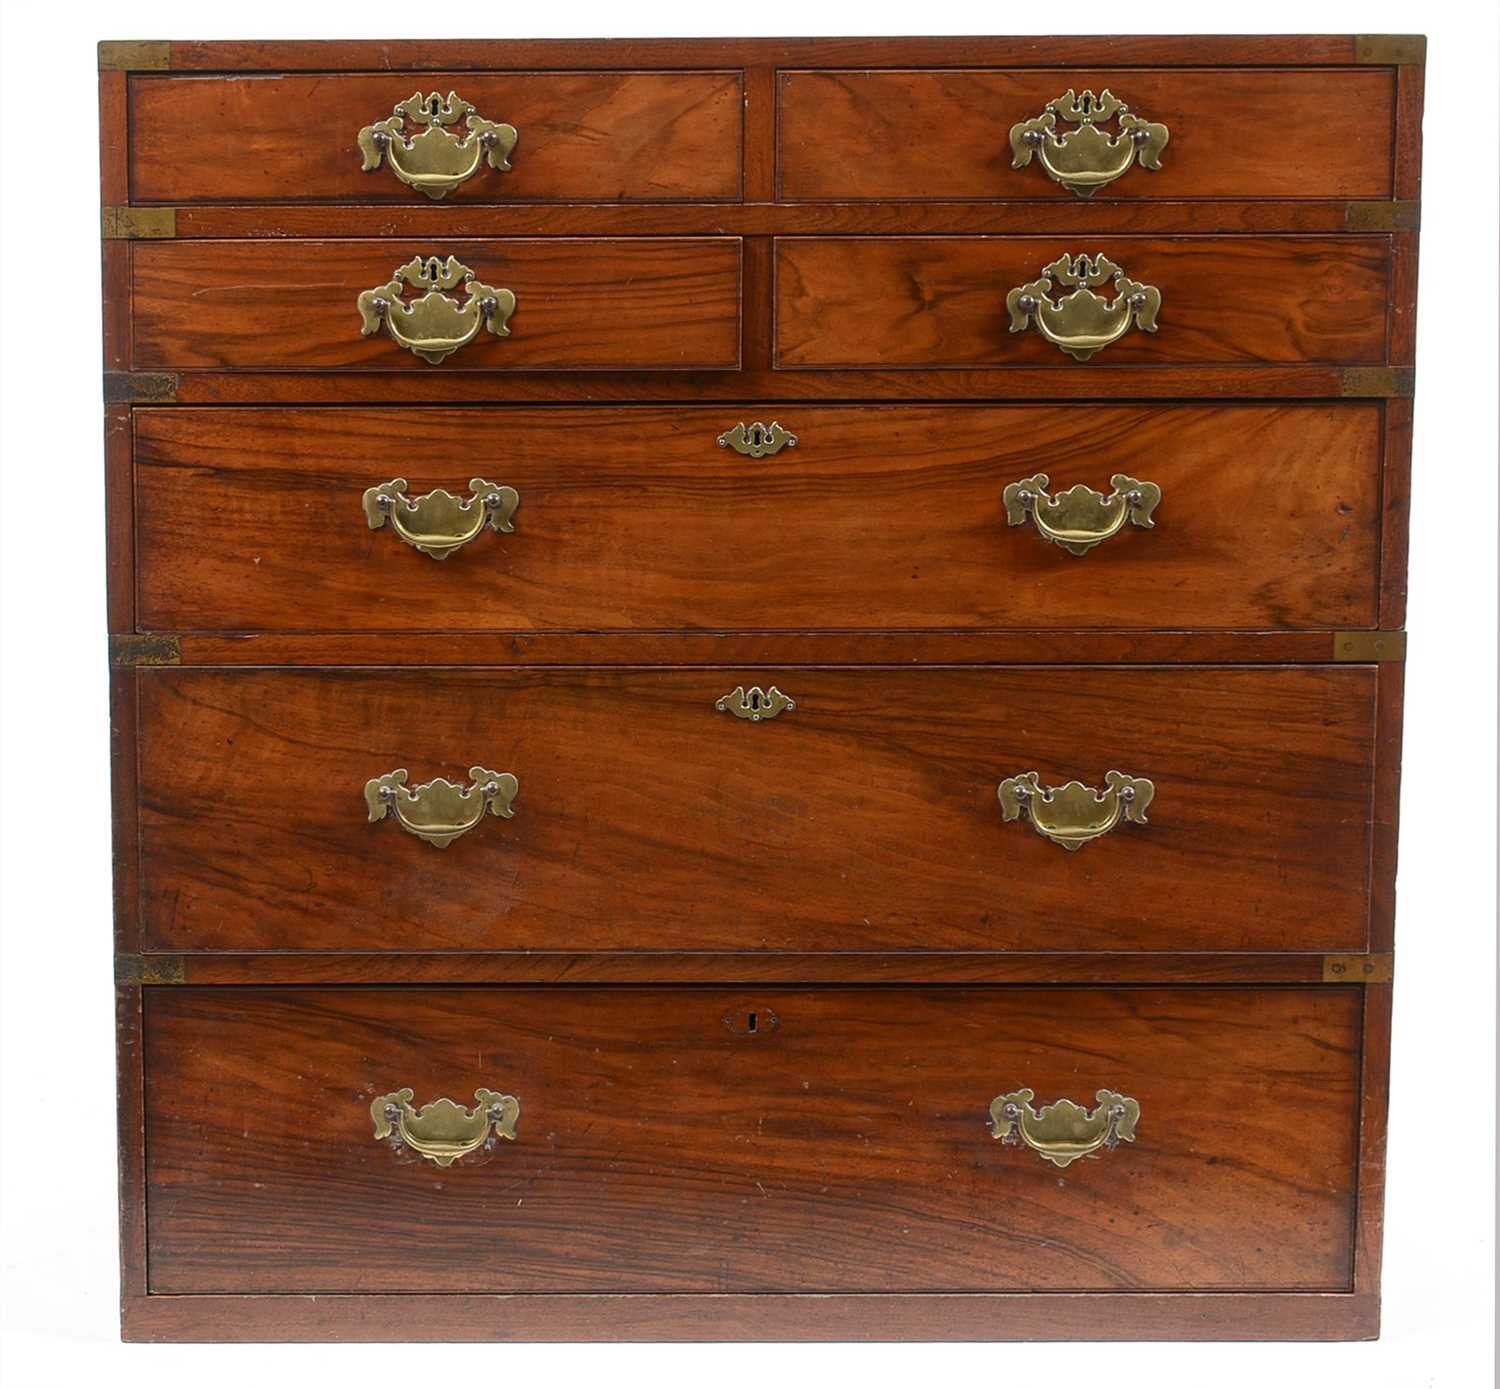 651 - A 19th Century Irish mahogany campaign chest by Ross & Co, Dublin.